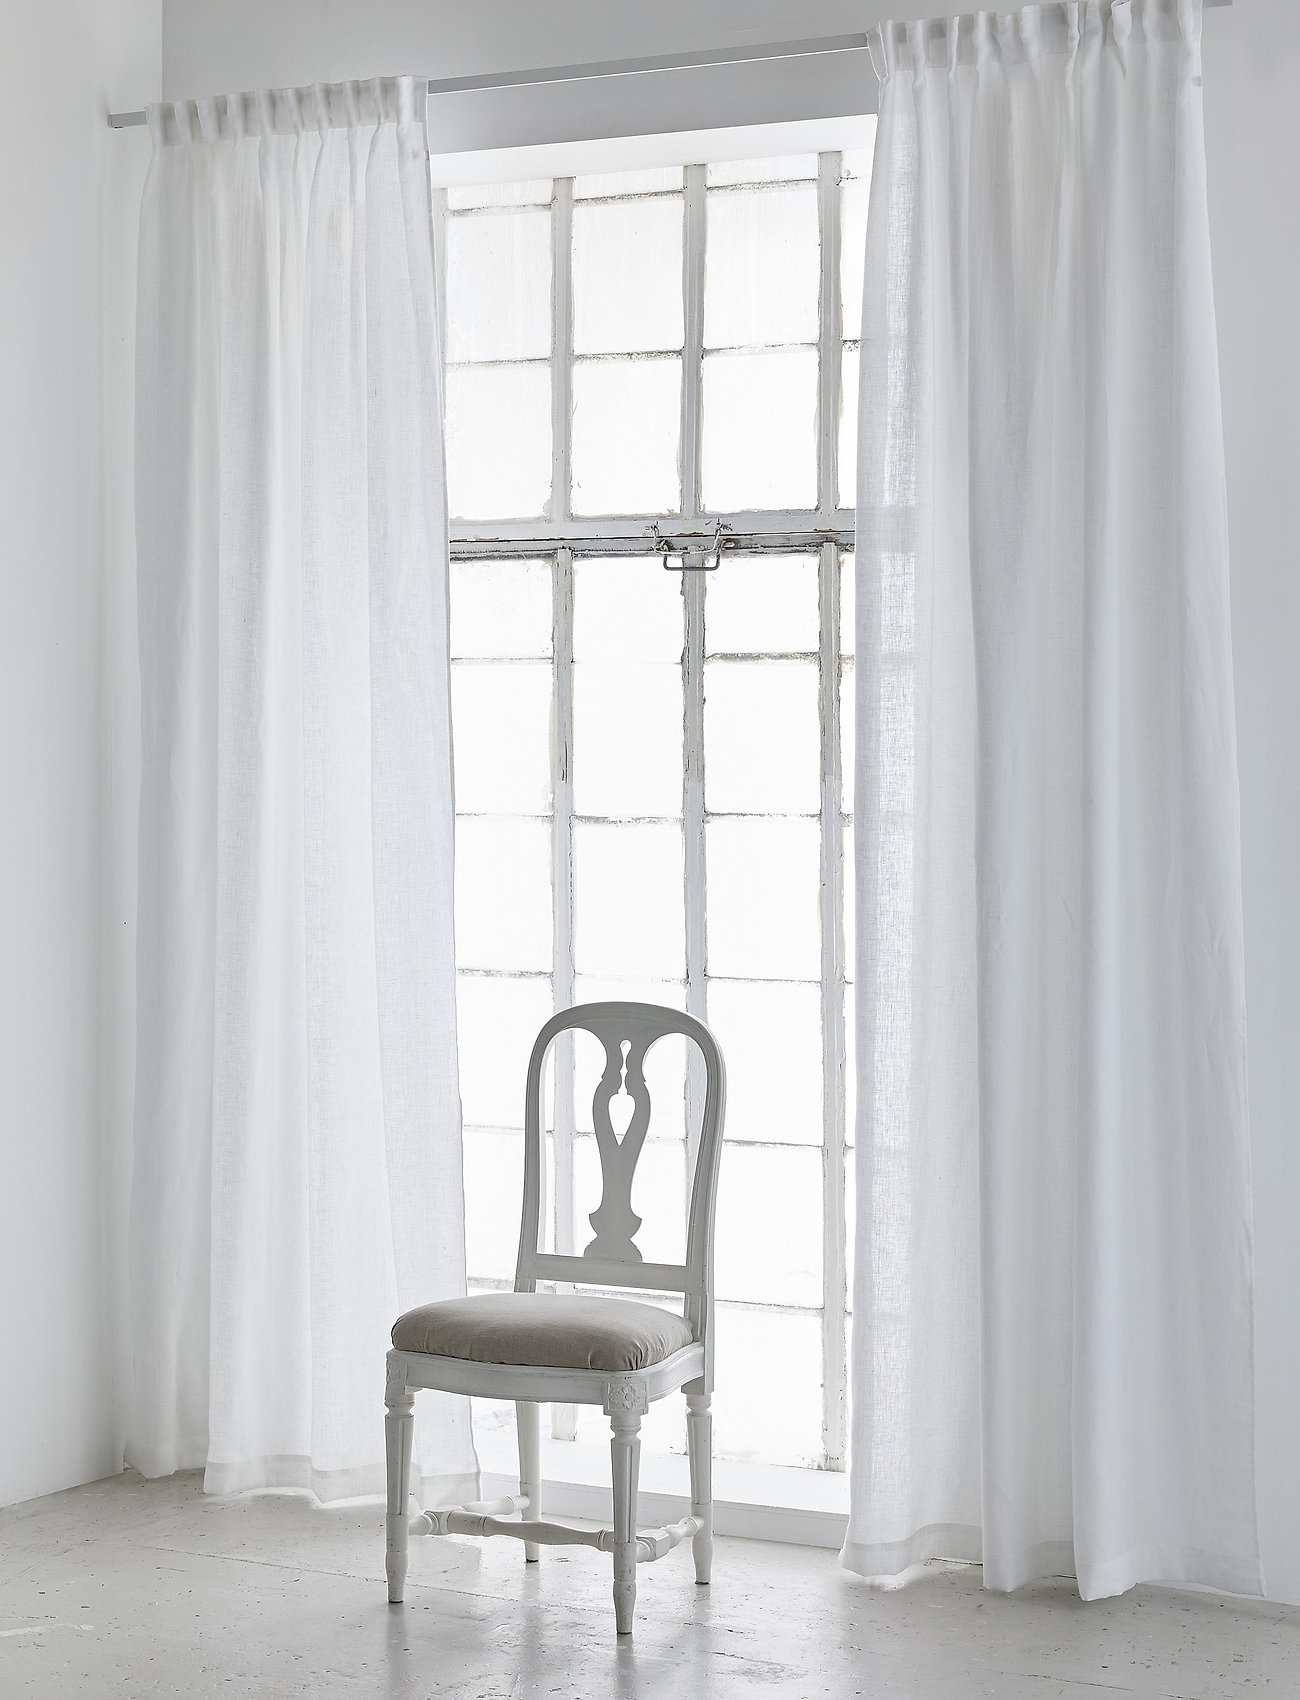 Himla - Springtime Curtain - long curtains - white - 1